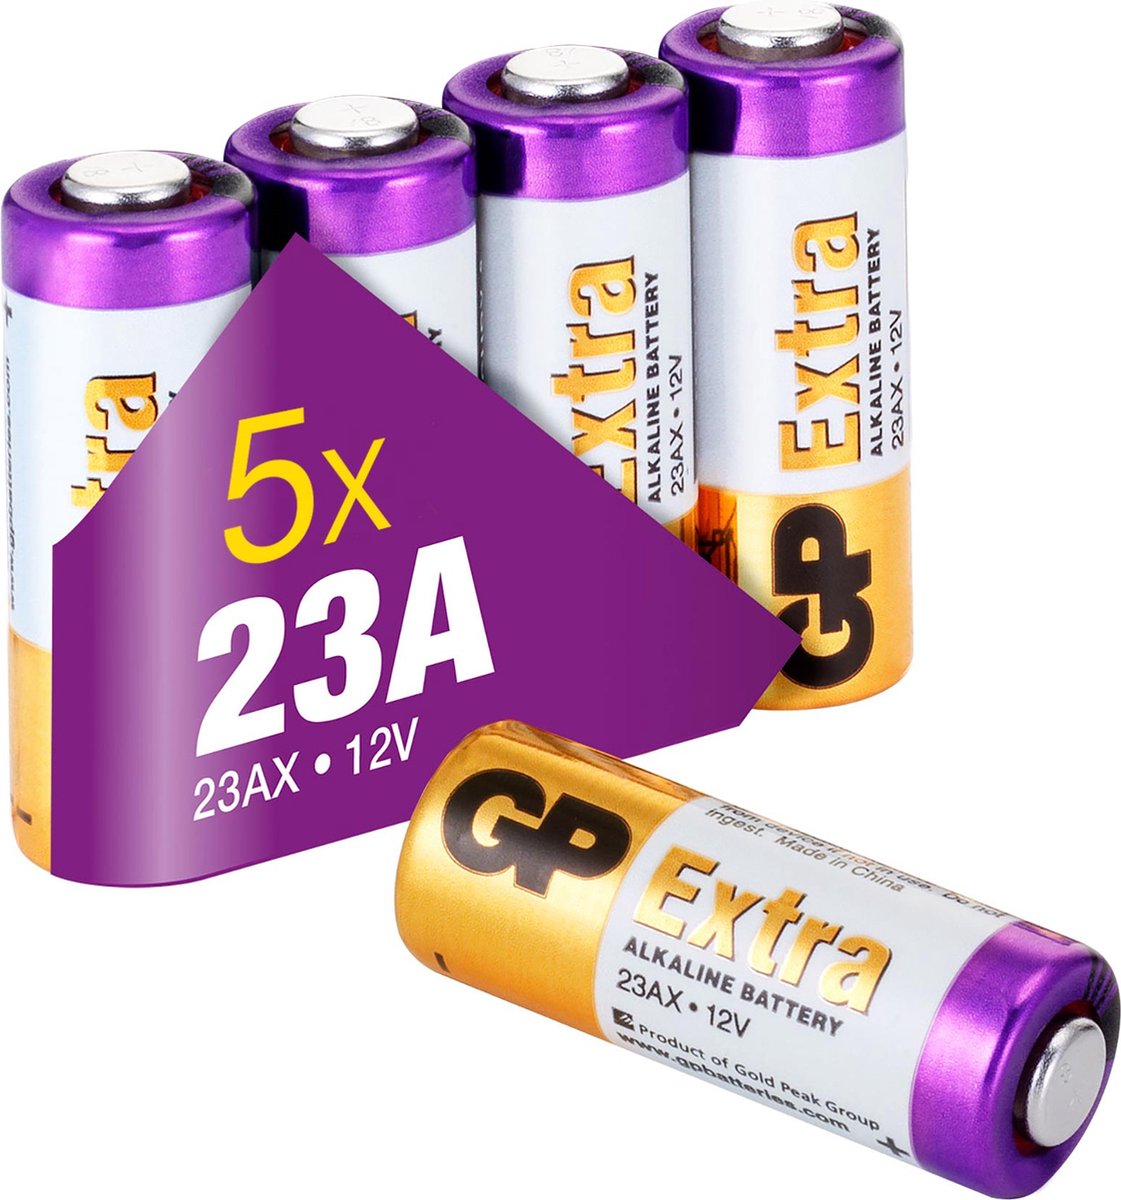 GP Extra Alkaline batterijen 23A batterij 12V A23 MN21 - 5 stuks - Beschermd tegen lekken - GP